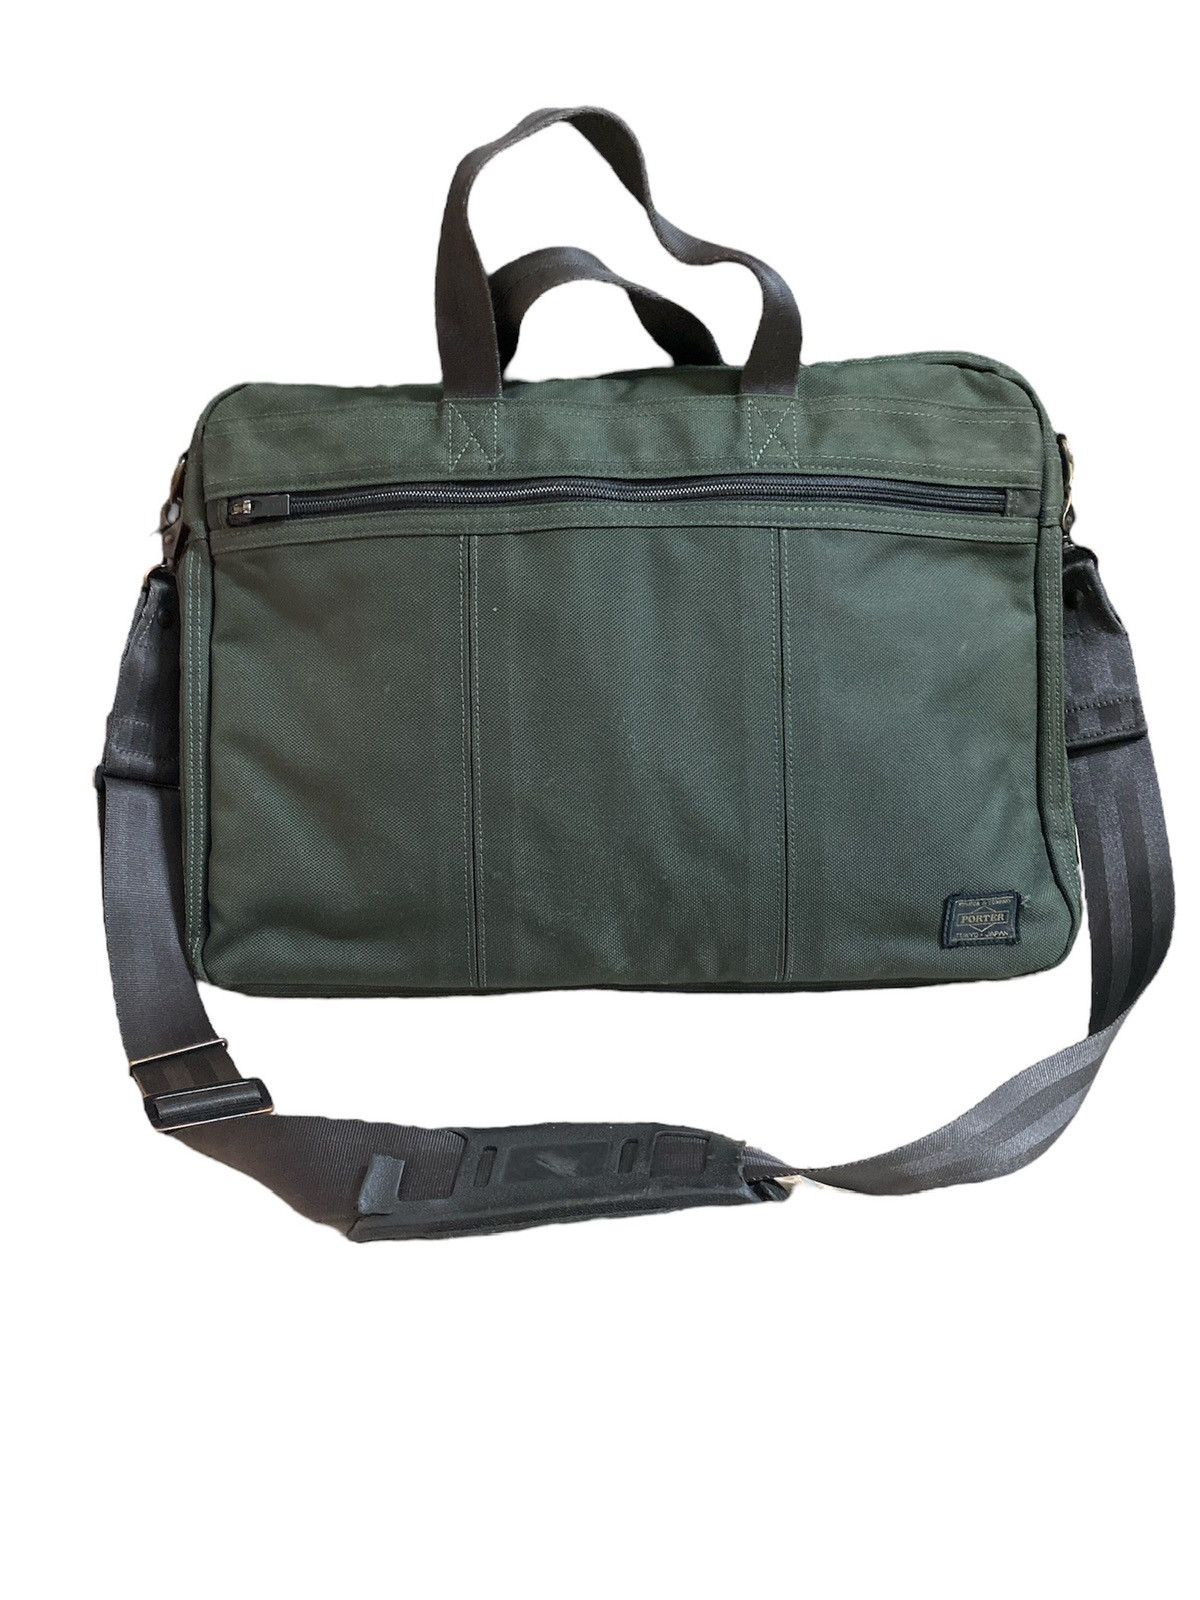 Porter Cordura Messenger Bag Green Army Made in Japan - 1